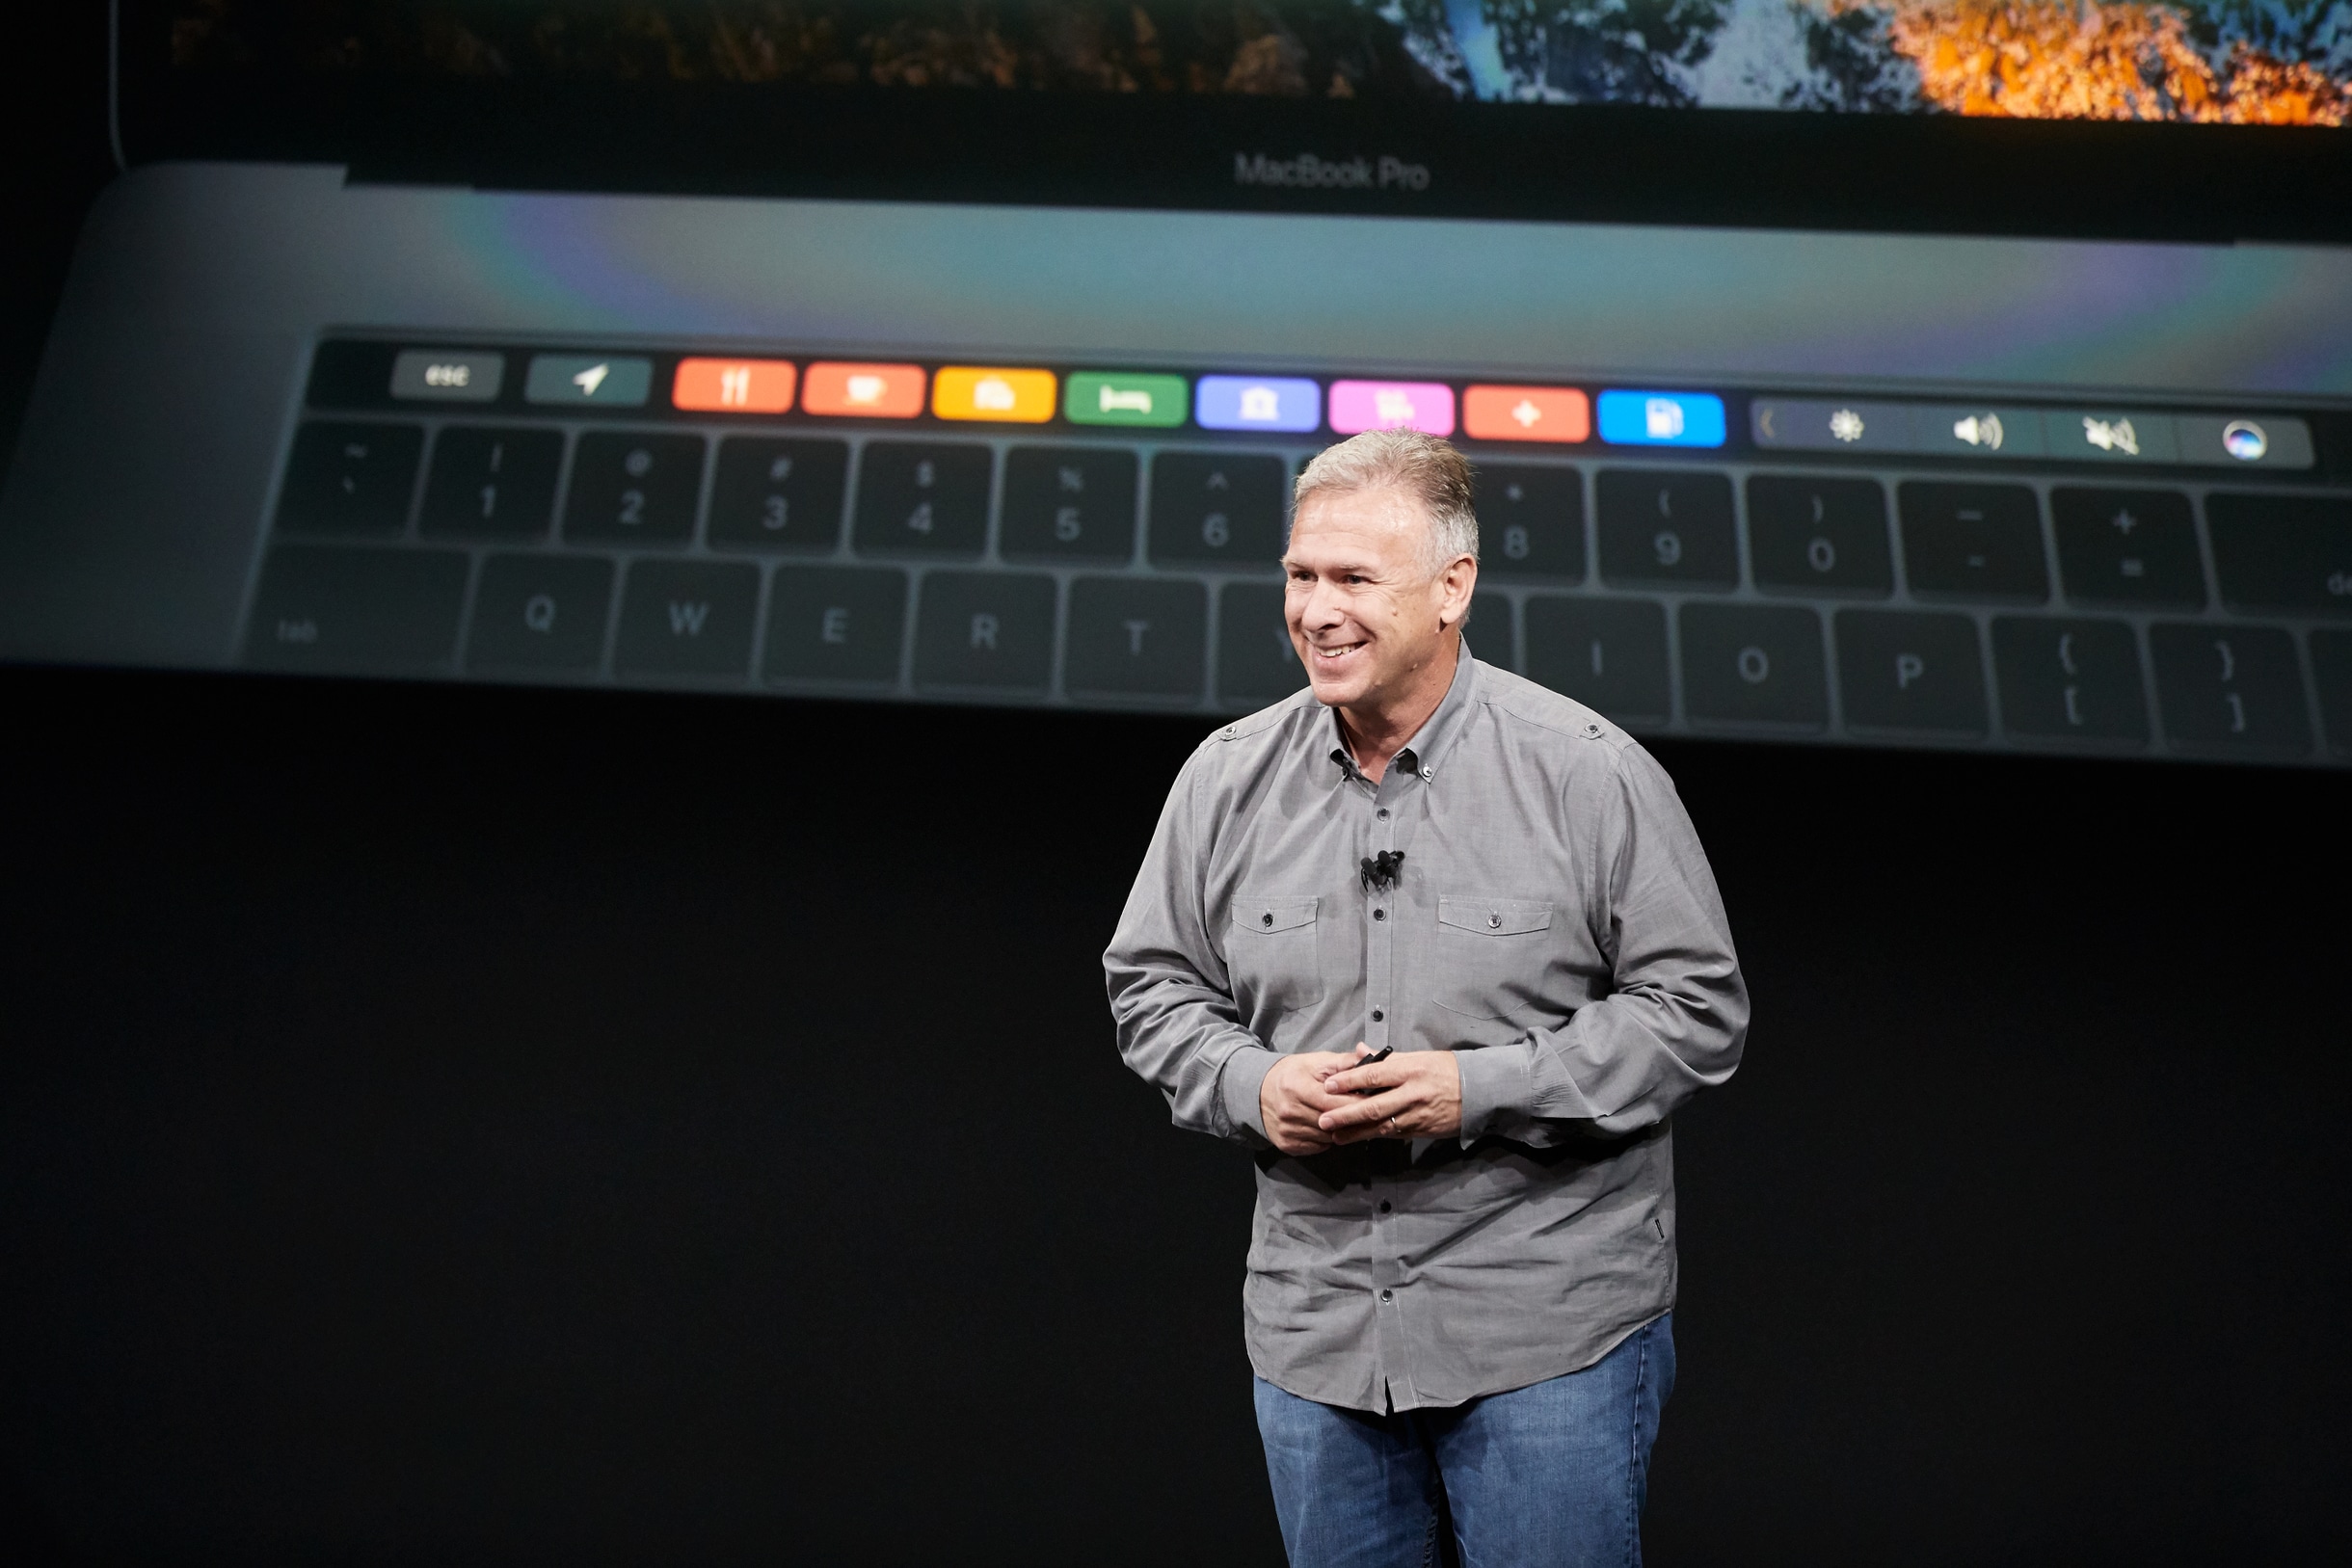 Evento especial da Apple - MacBook Pro - Outubro de 2016